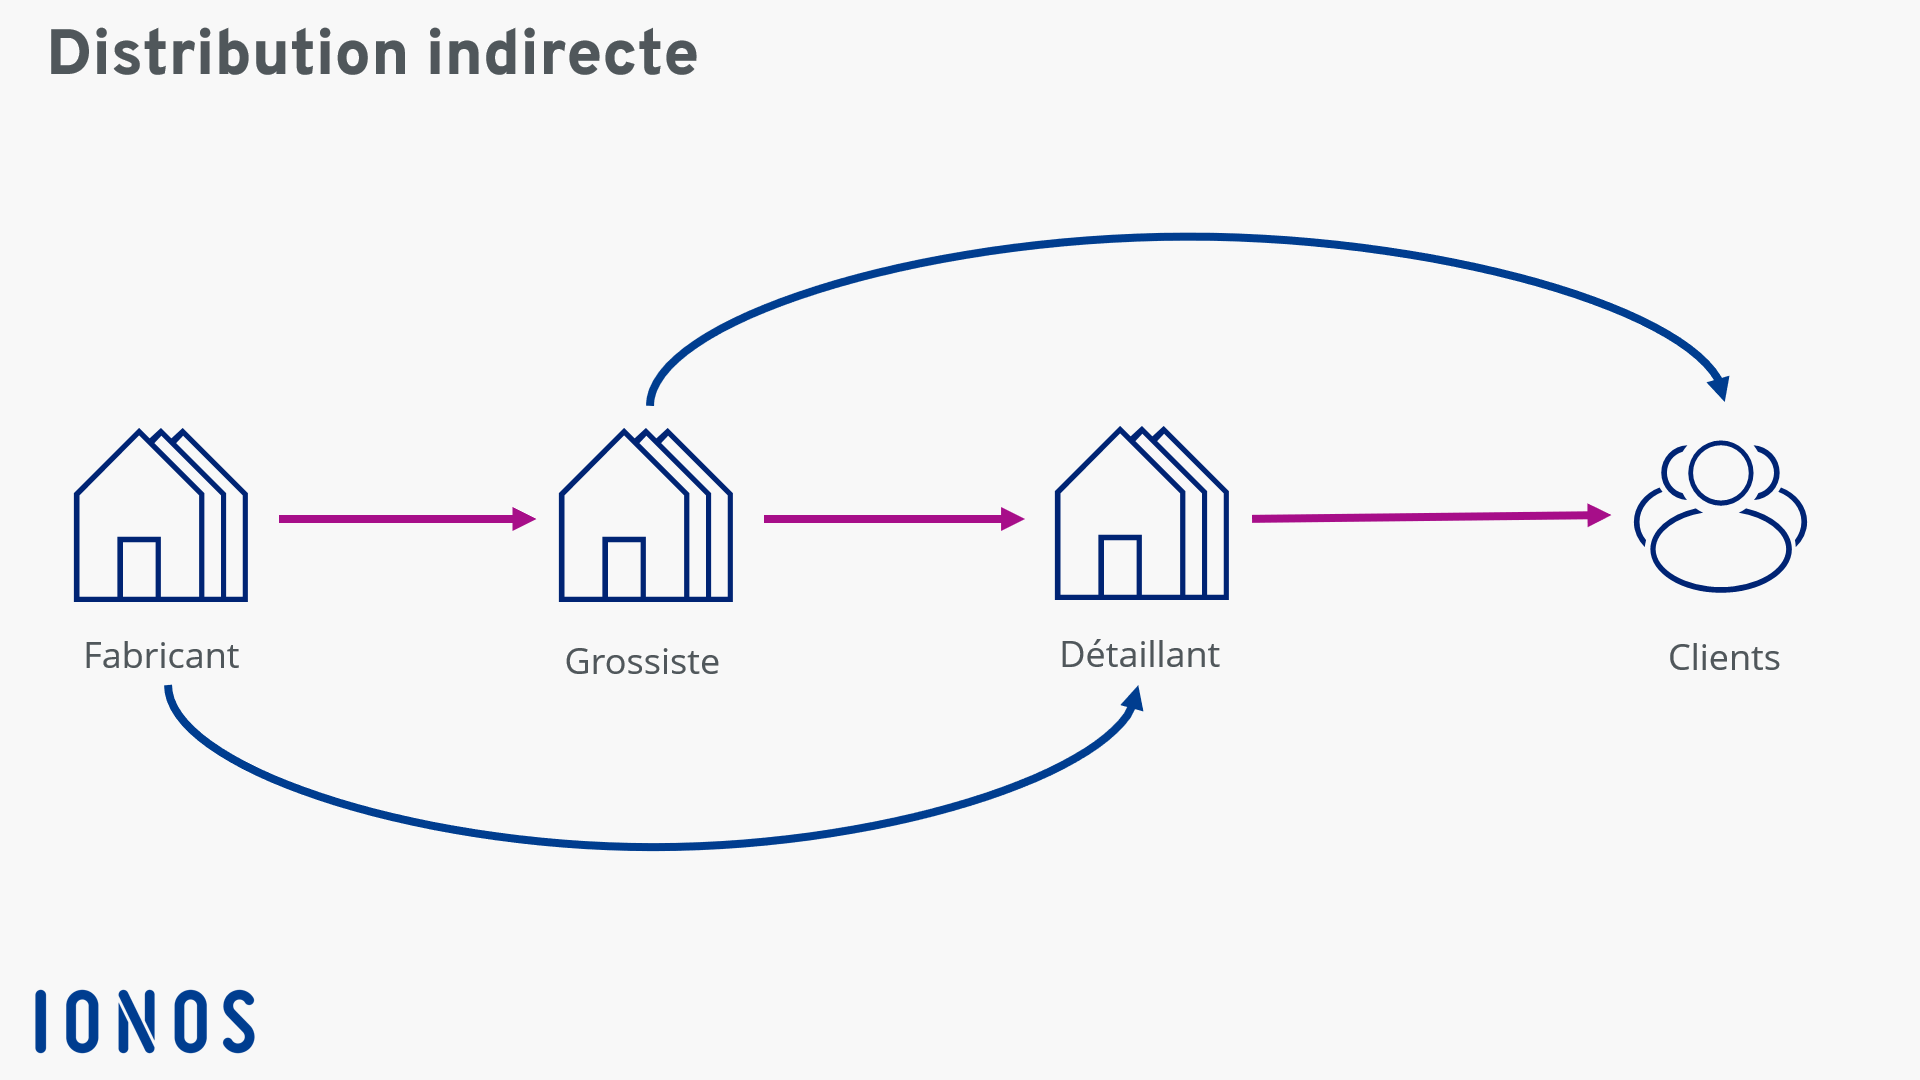 Distribution indirecte